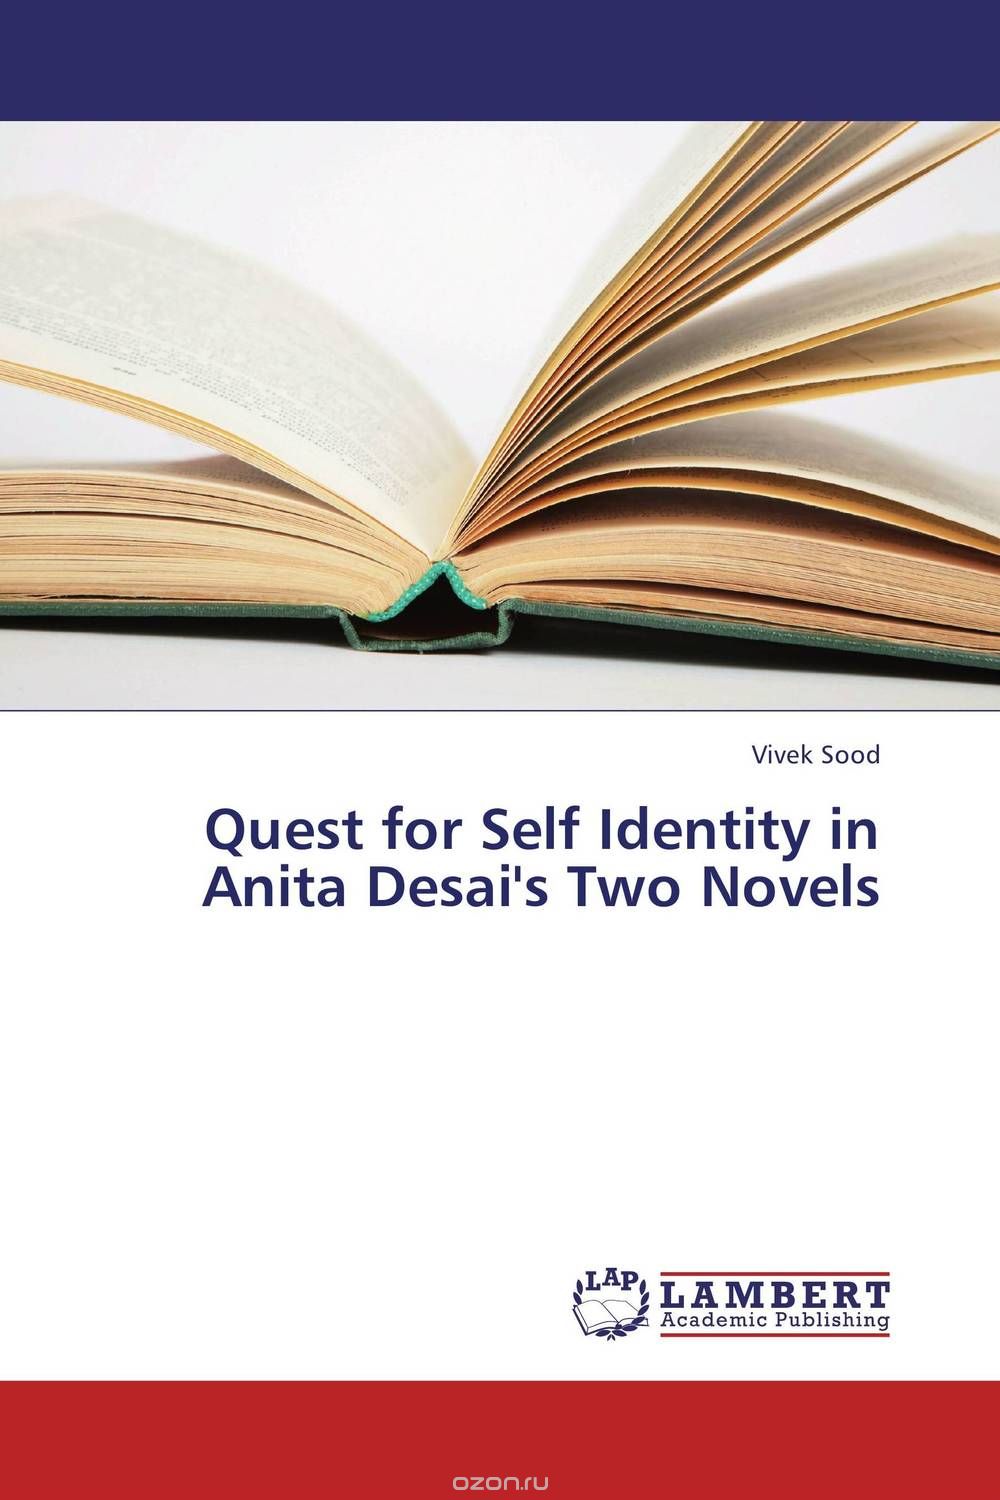 Скачать книгу "Quest for Self Identity in Anita Desai's Two Novels"